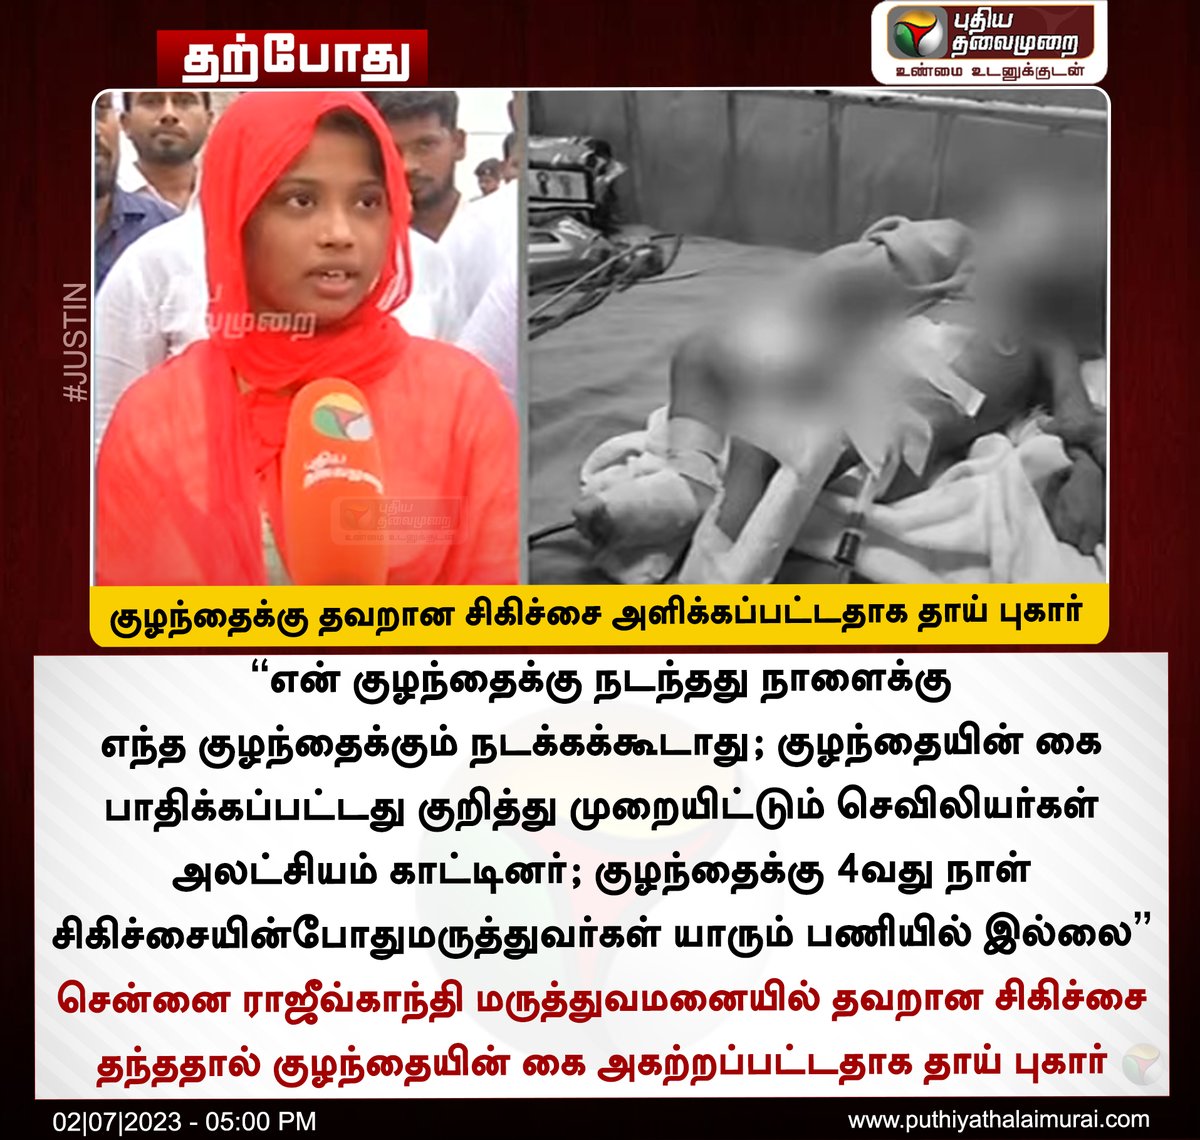 #JUSTIN | குழந்தைக்கு தவறான சிகிச்சை அளிக்கப்பட்டதாக தாய் புகார்

#RajivGandhiGovernmentGeneralHospital | #Chennai | #ChildHand | #RajivGandhiHospital | #TNGovt